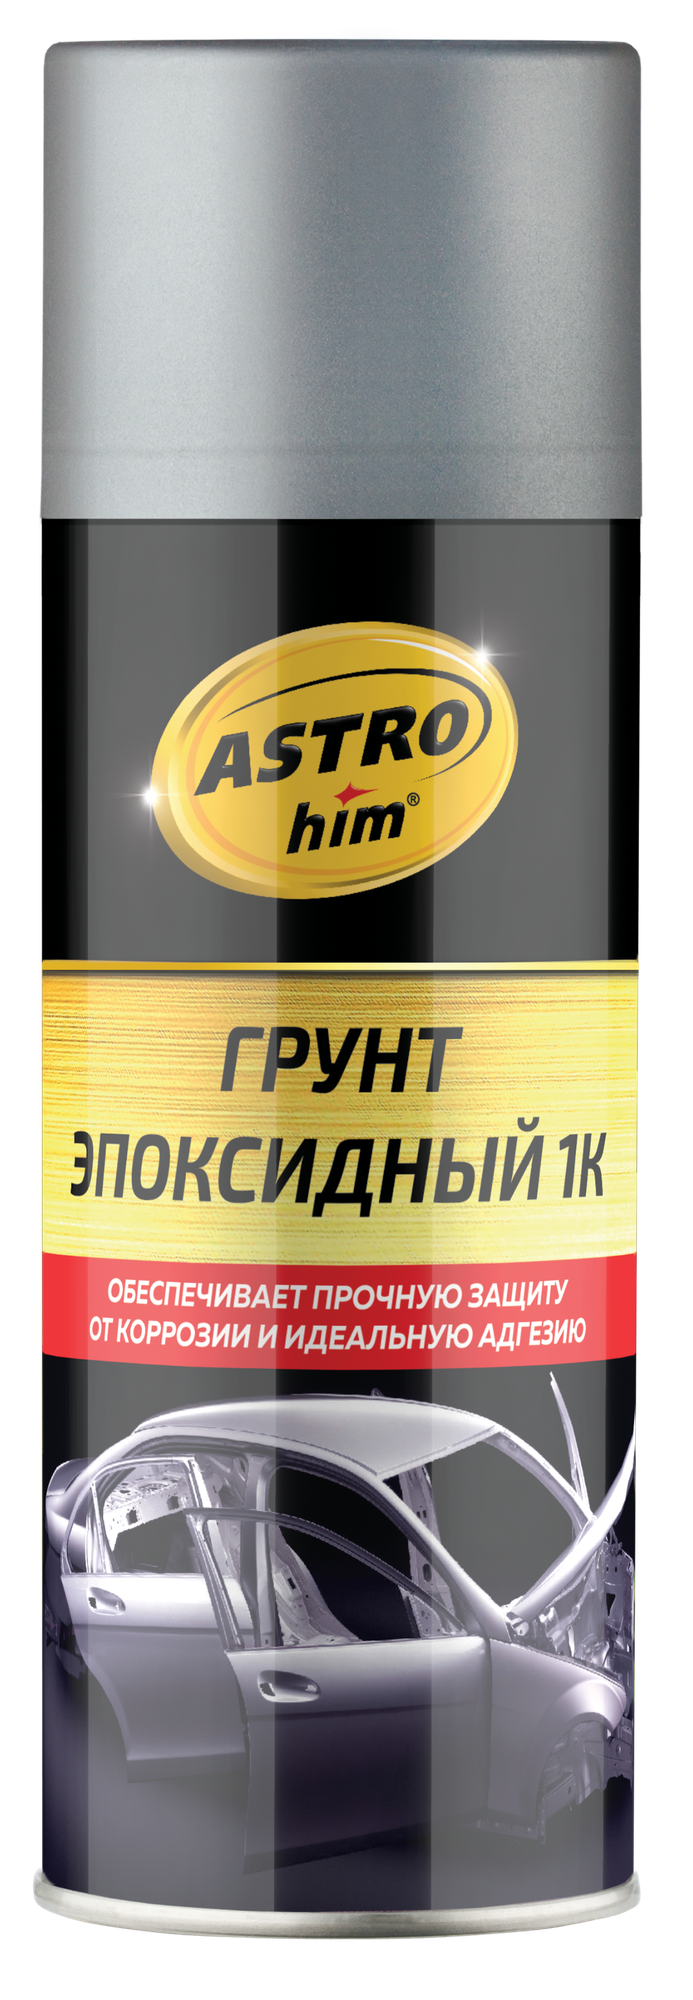 ASTROhim Грунт эпоксидный 1К, аэрозоль 520 мл